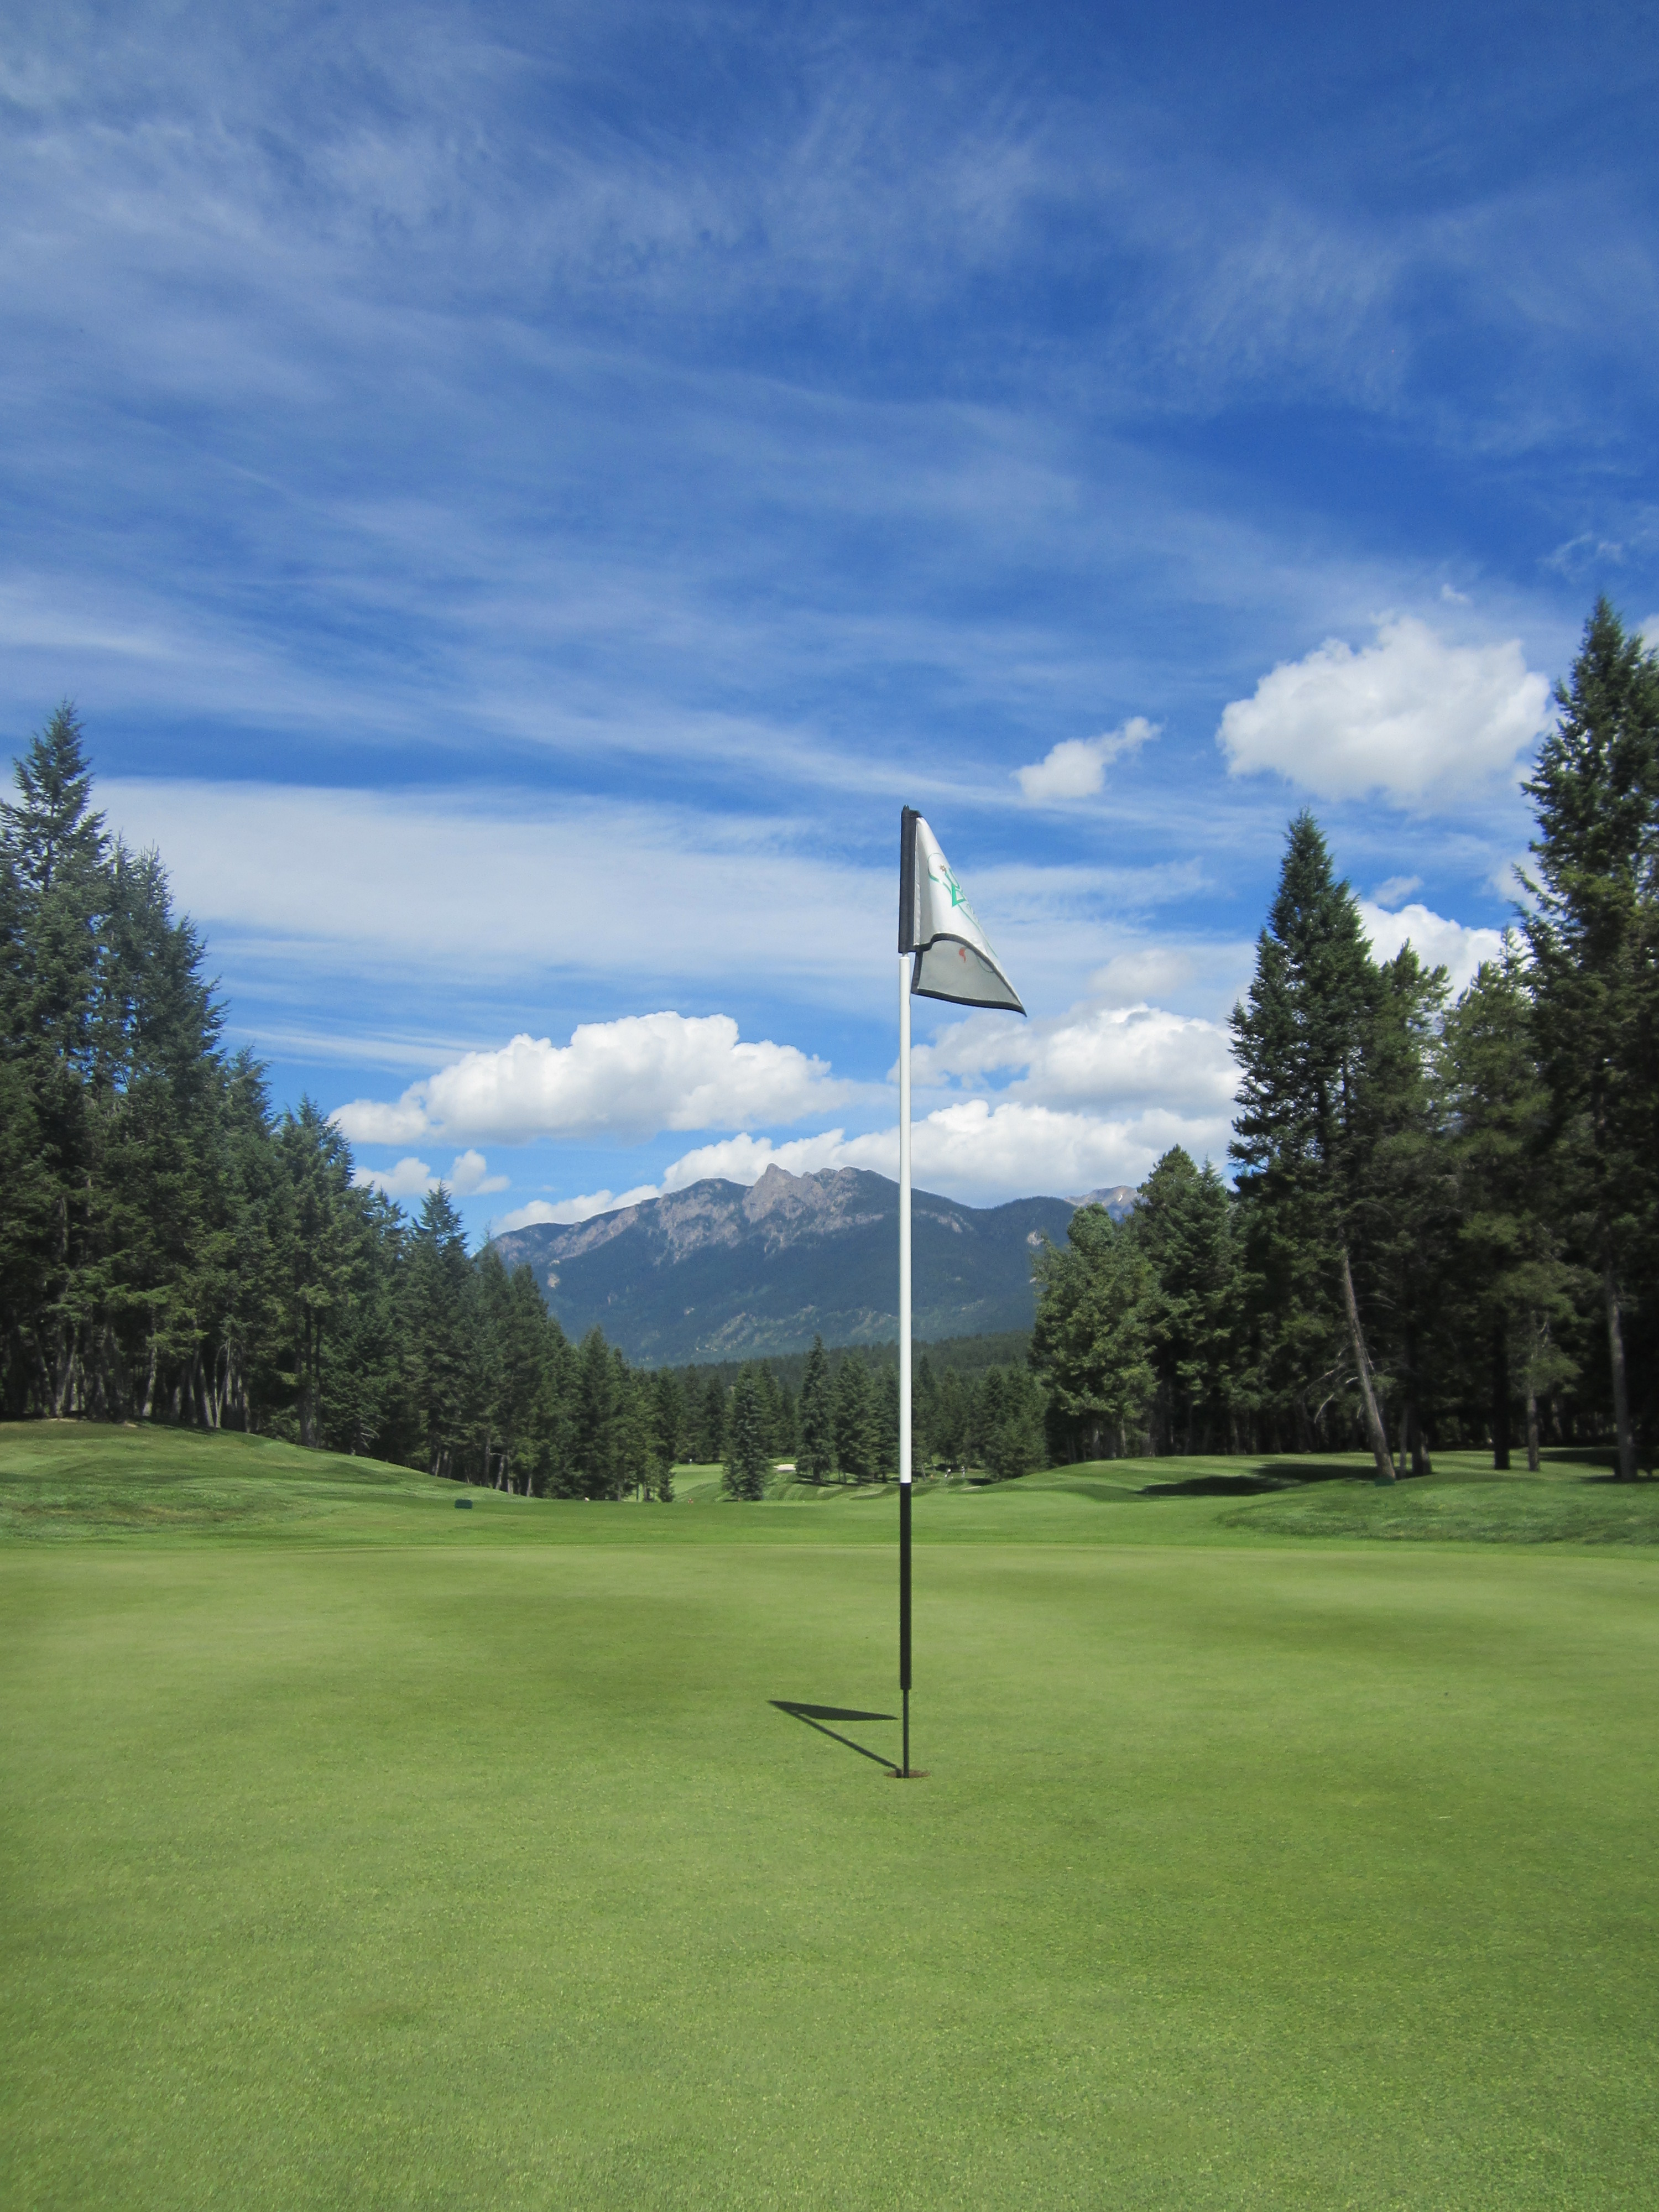 Golf course - Wikipedia